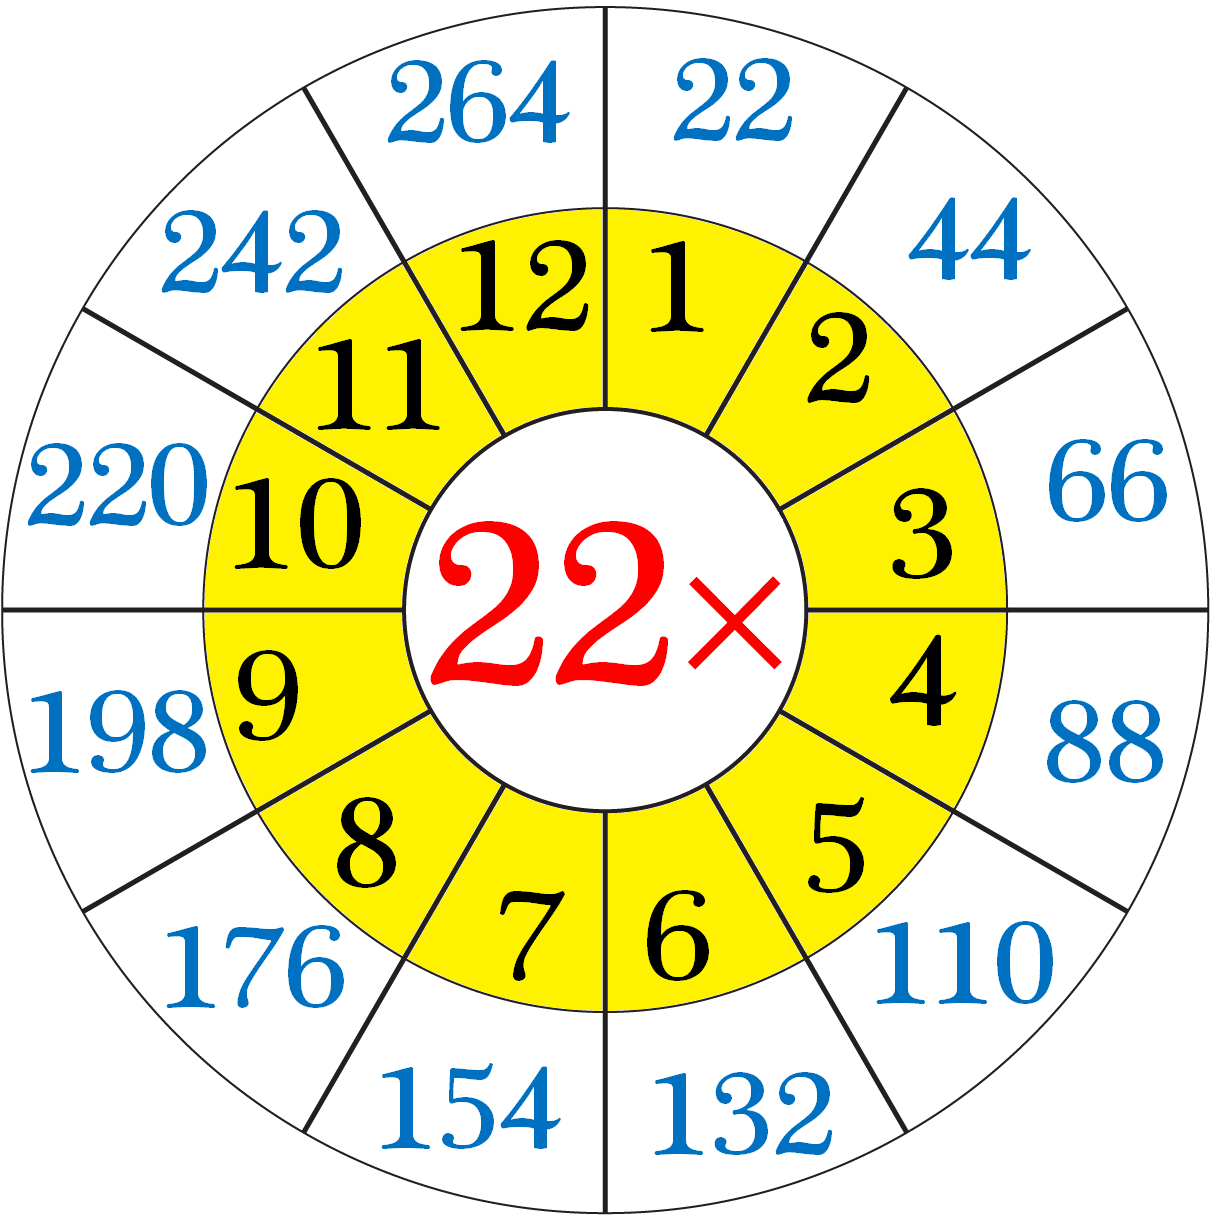 Multiplication Table of Twenty-Two